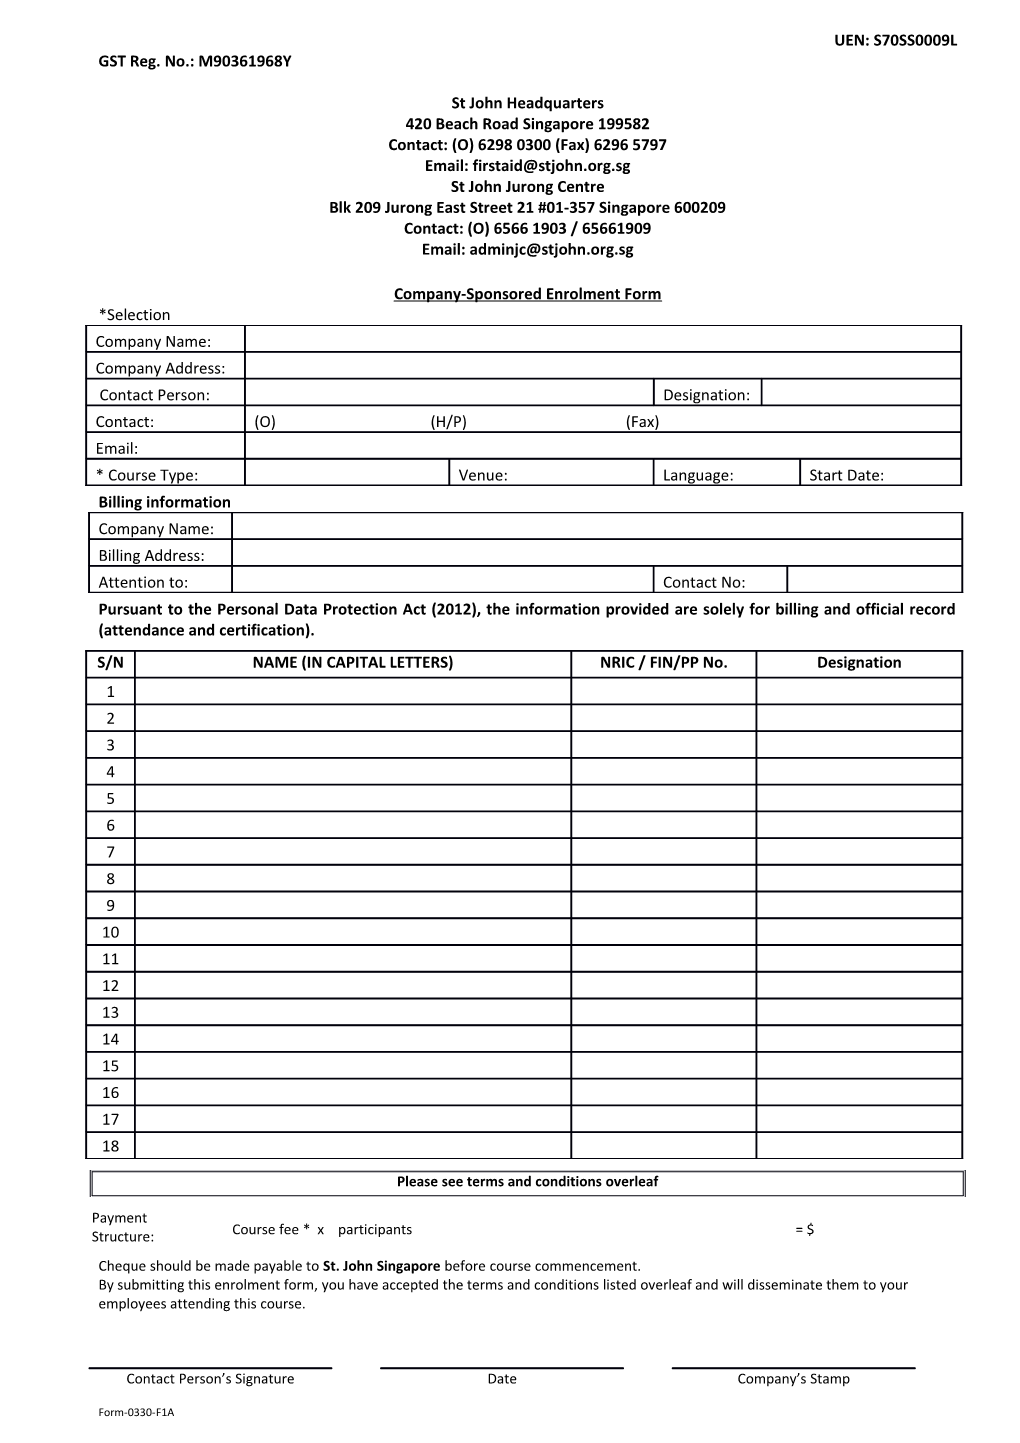 Company-Sponsored Enrolment Form